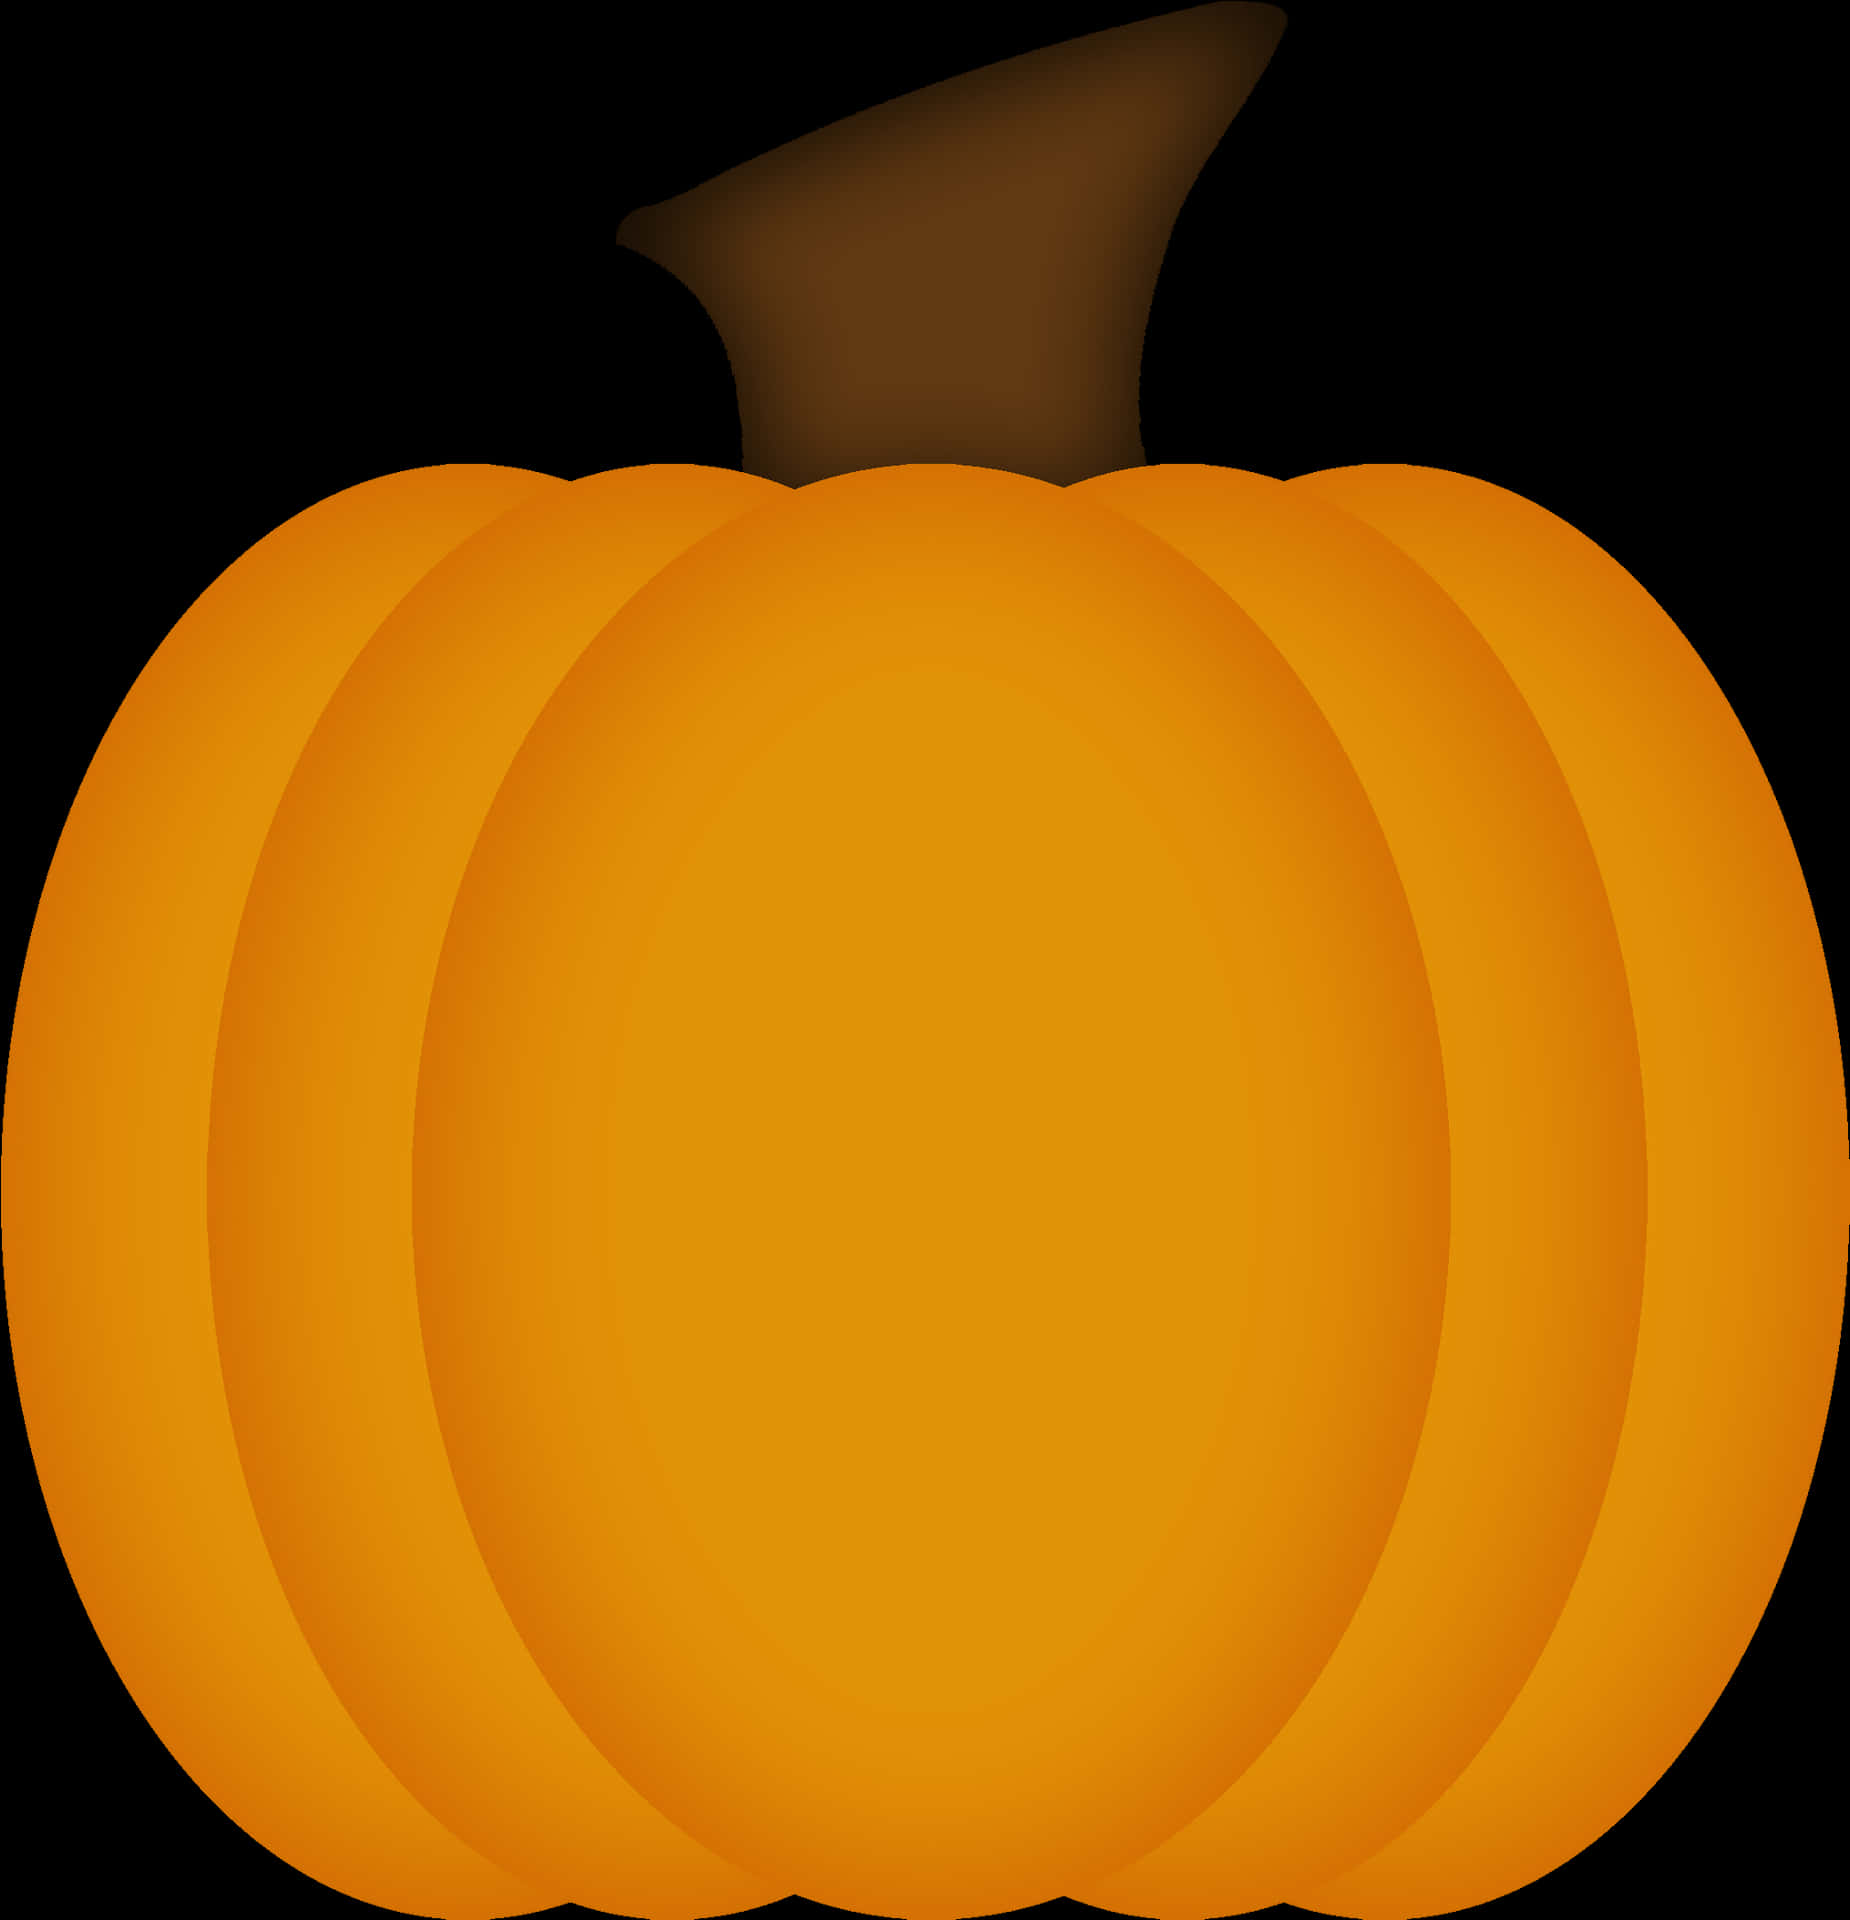 Stylized Orange Pumpkin Graphic PNG